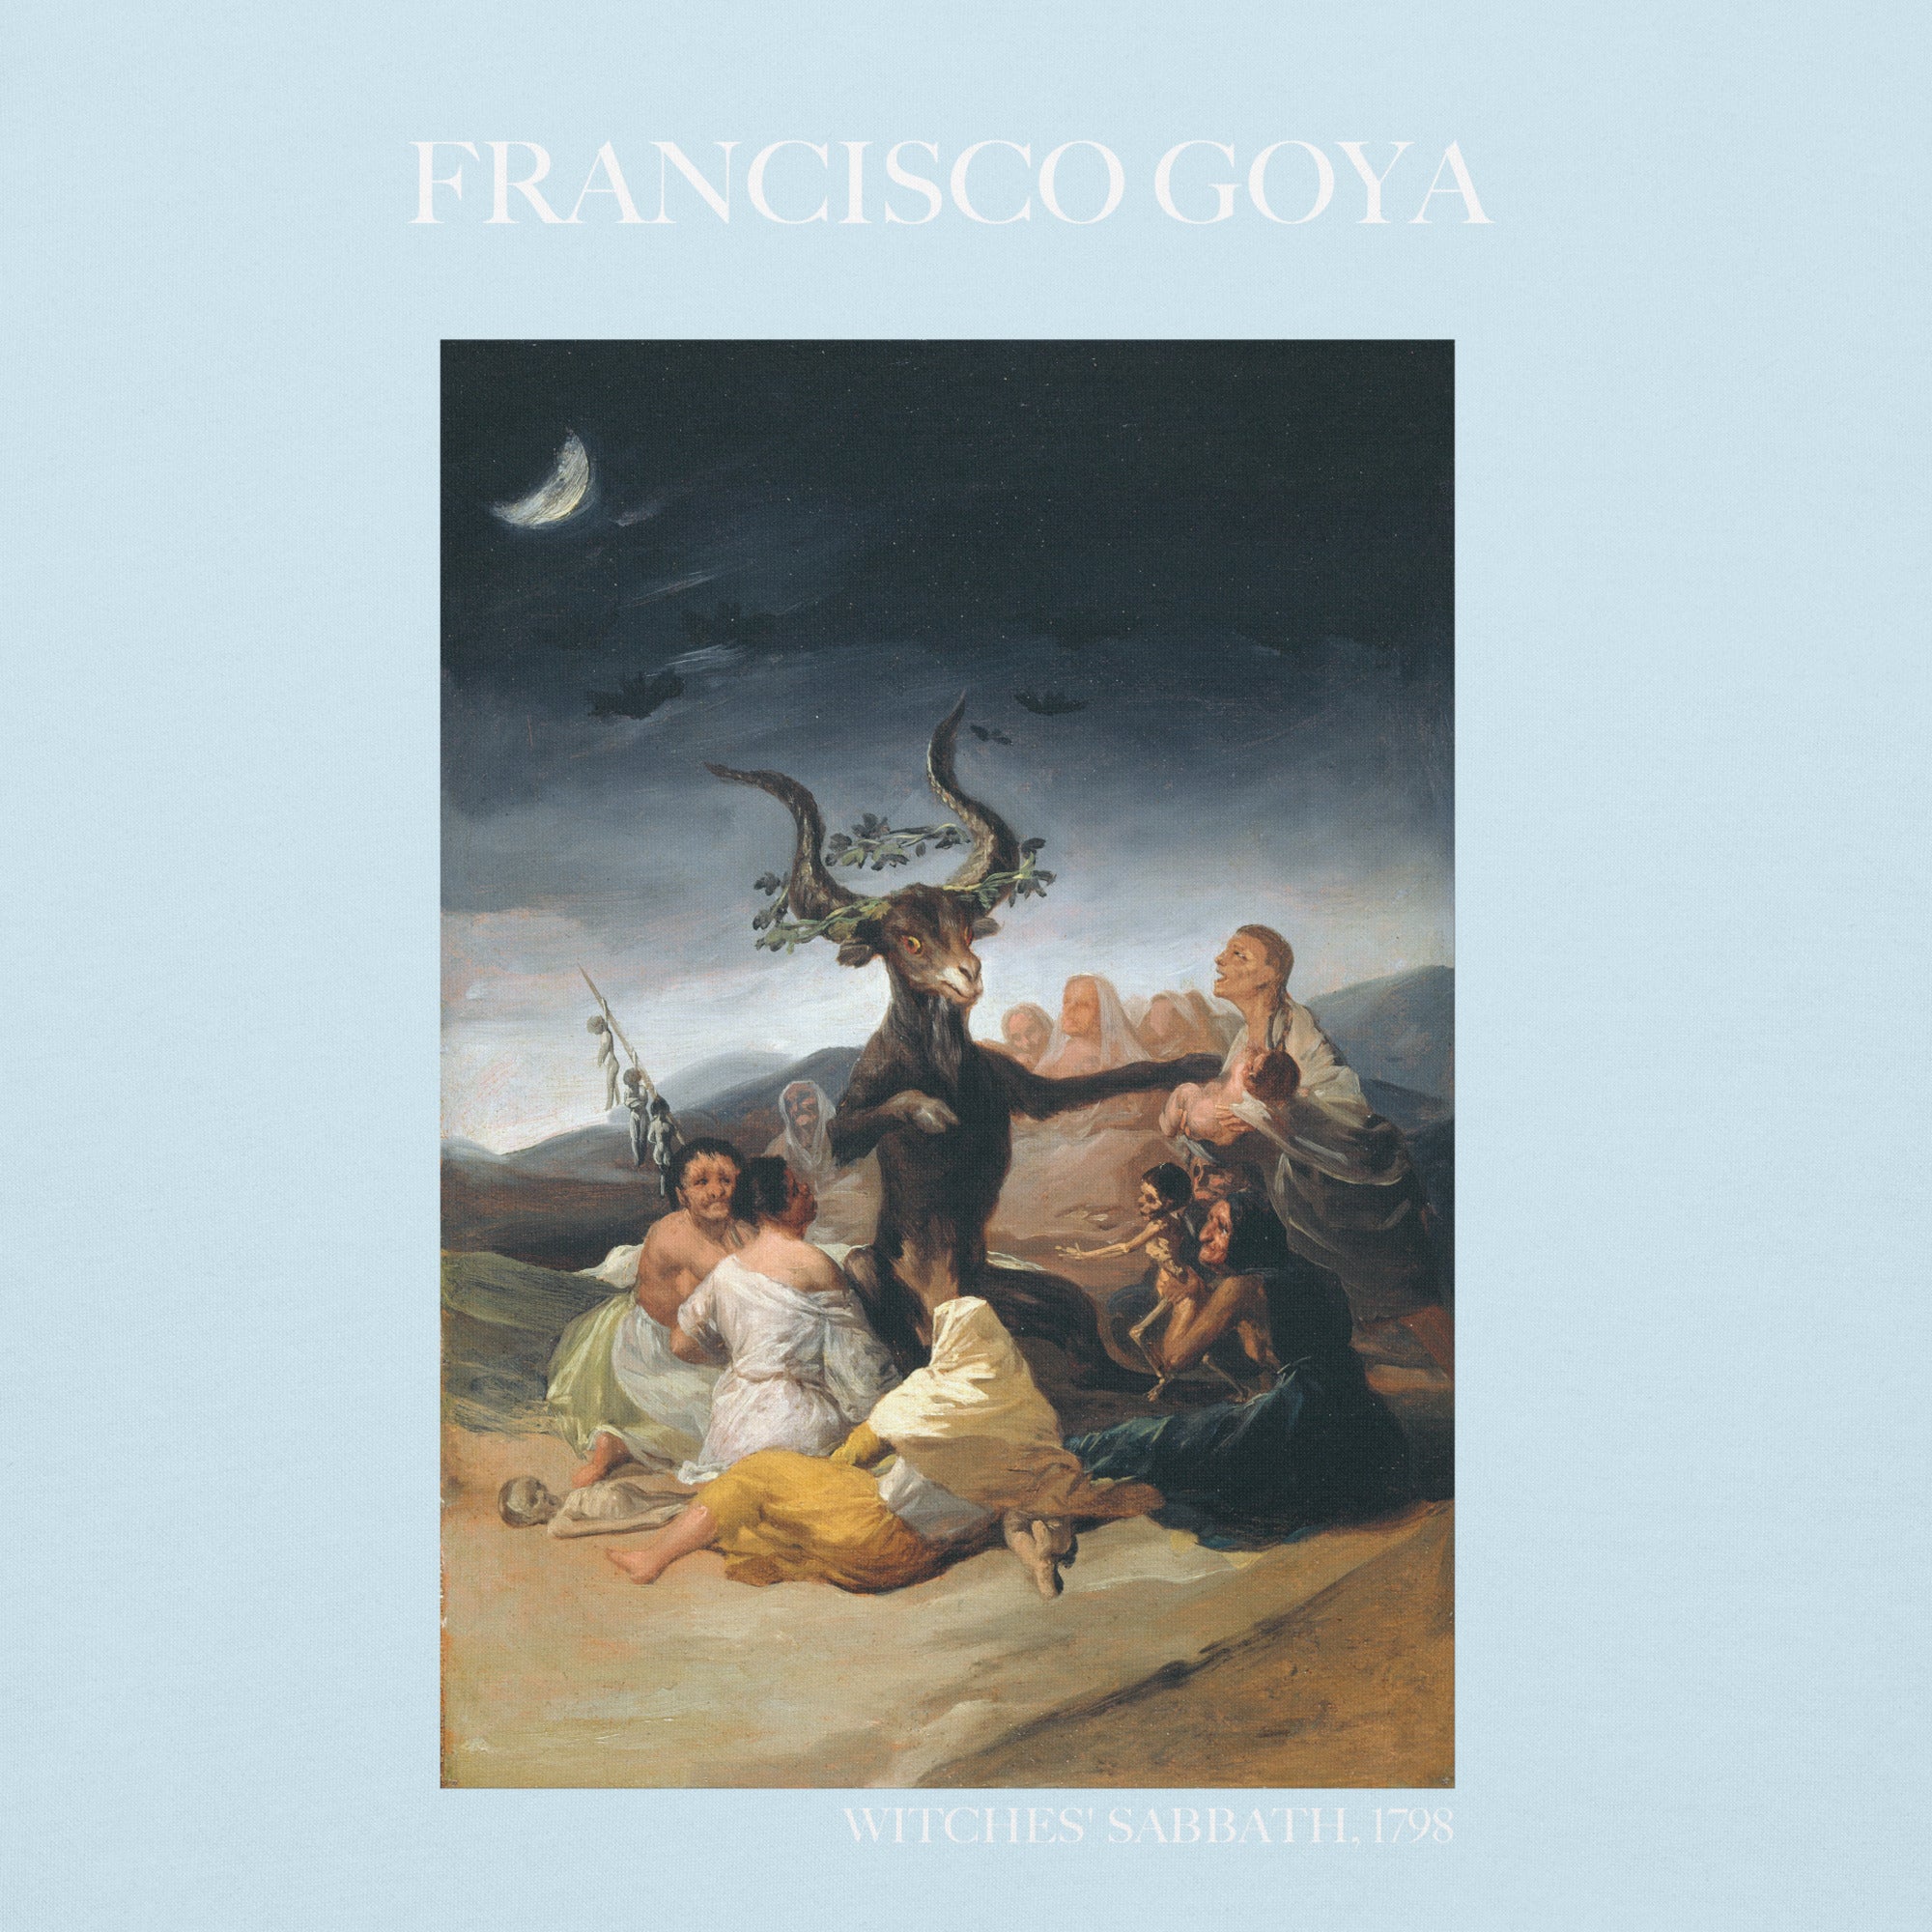 Francisco Goya 'Witches' Sabbath' Famous Painting Hoodie | Unisex Premium Art Hoodie